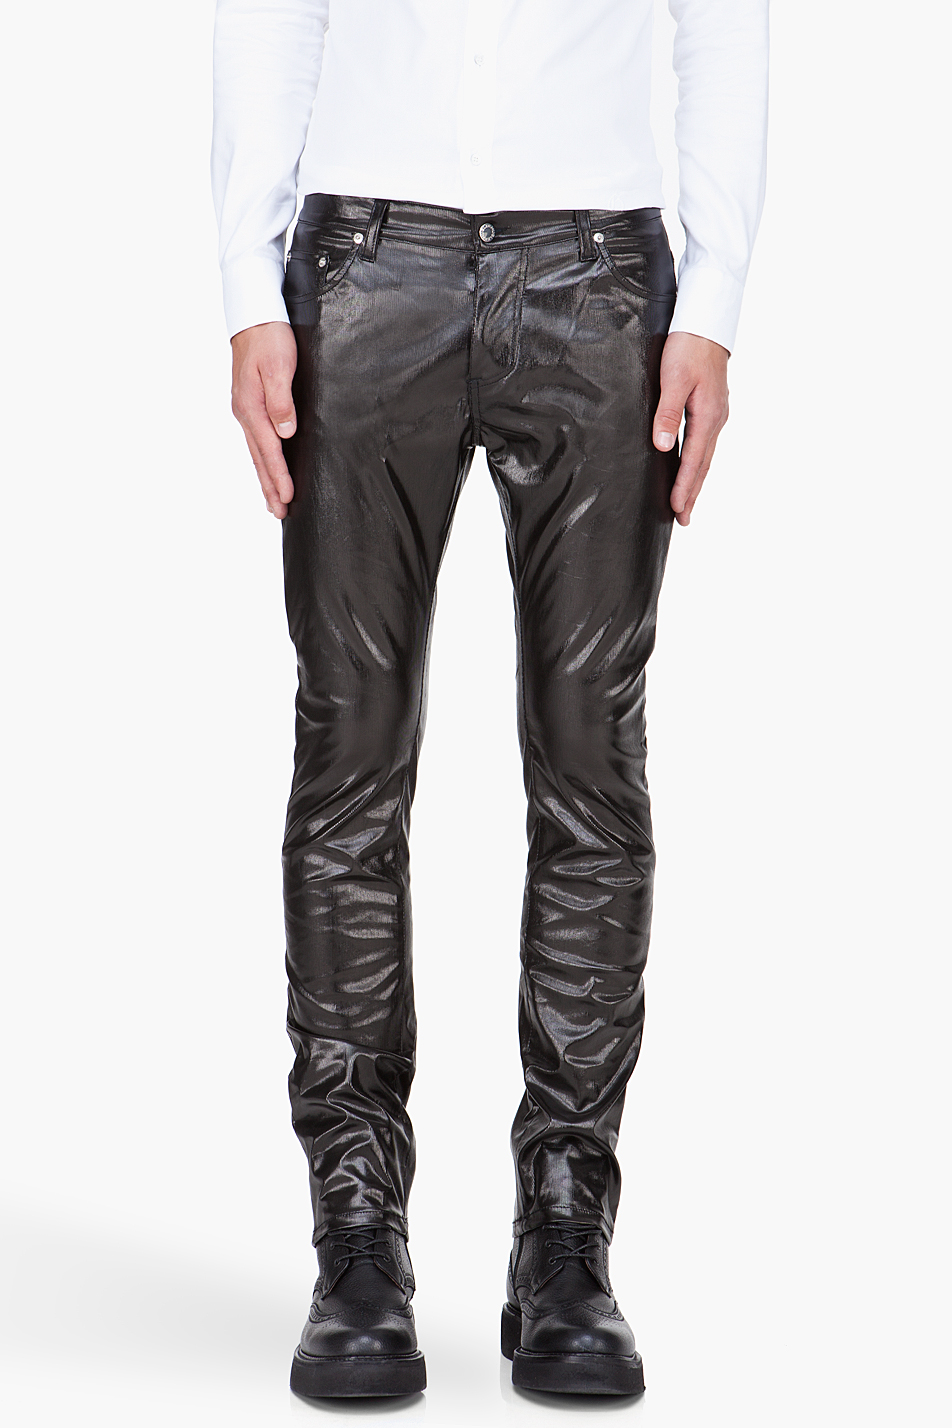 Lyst - Mugler Faux Leather Pants in Black for Men